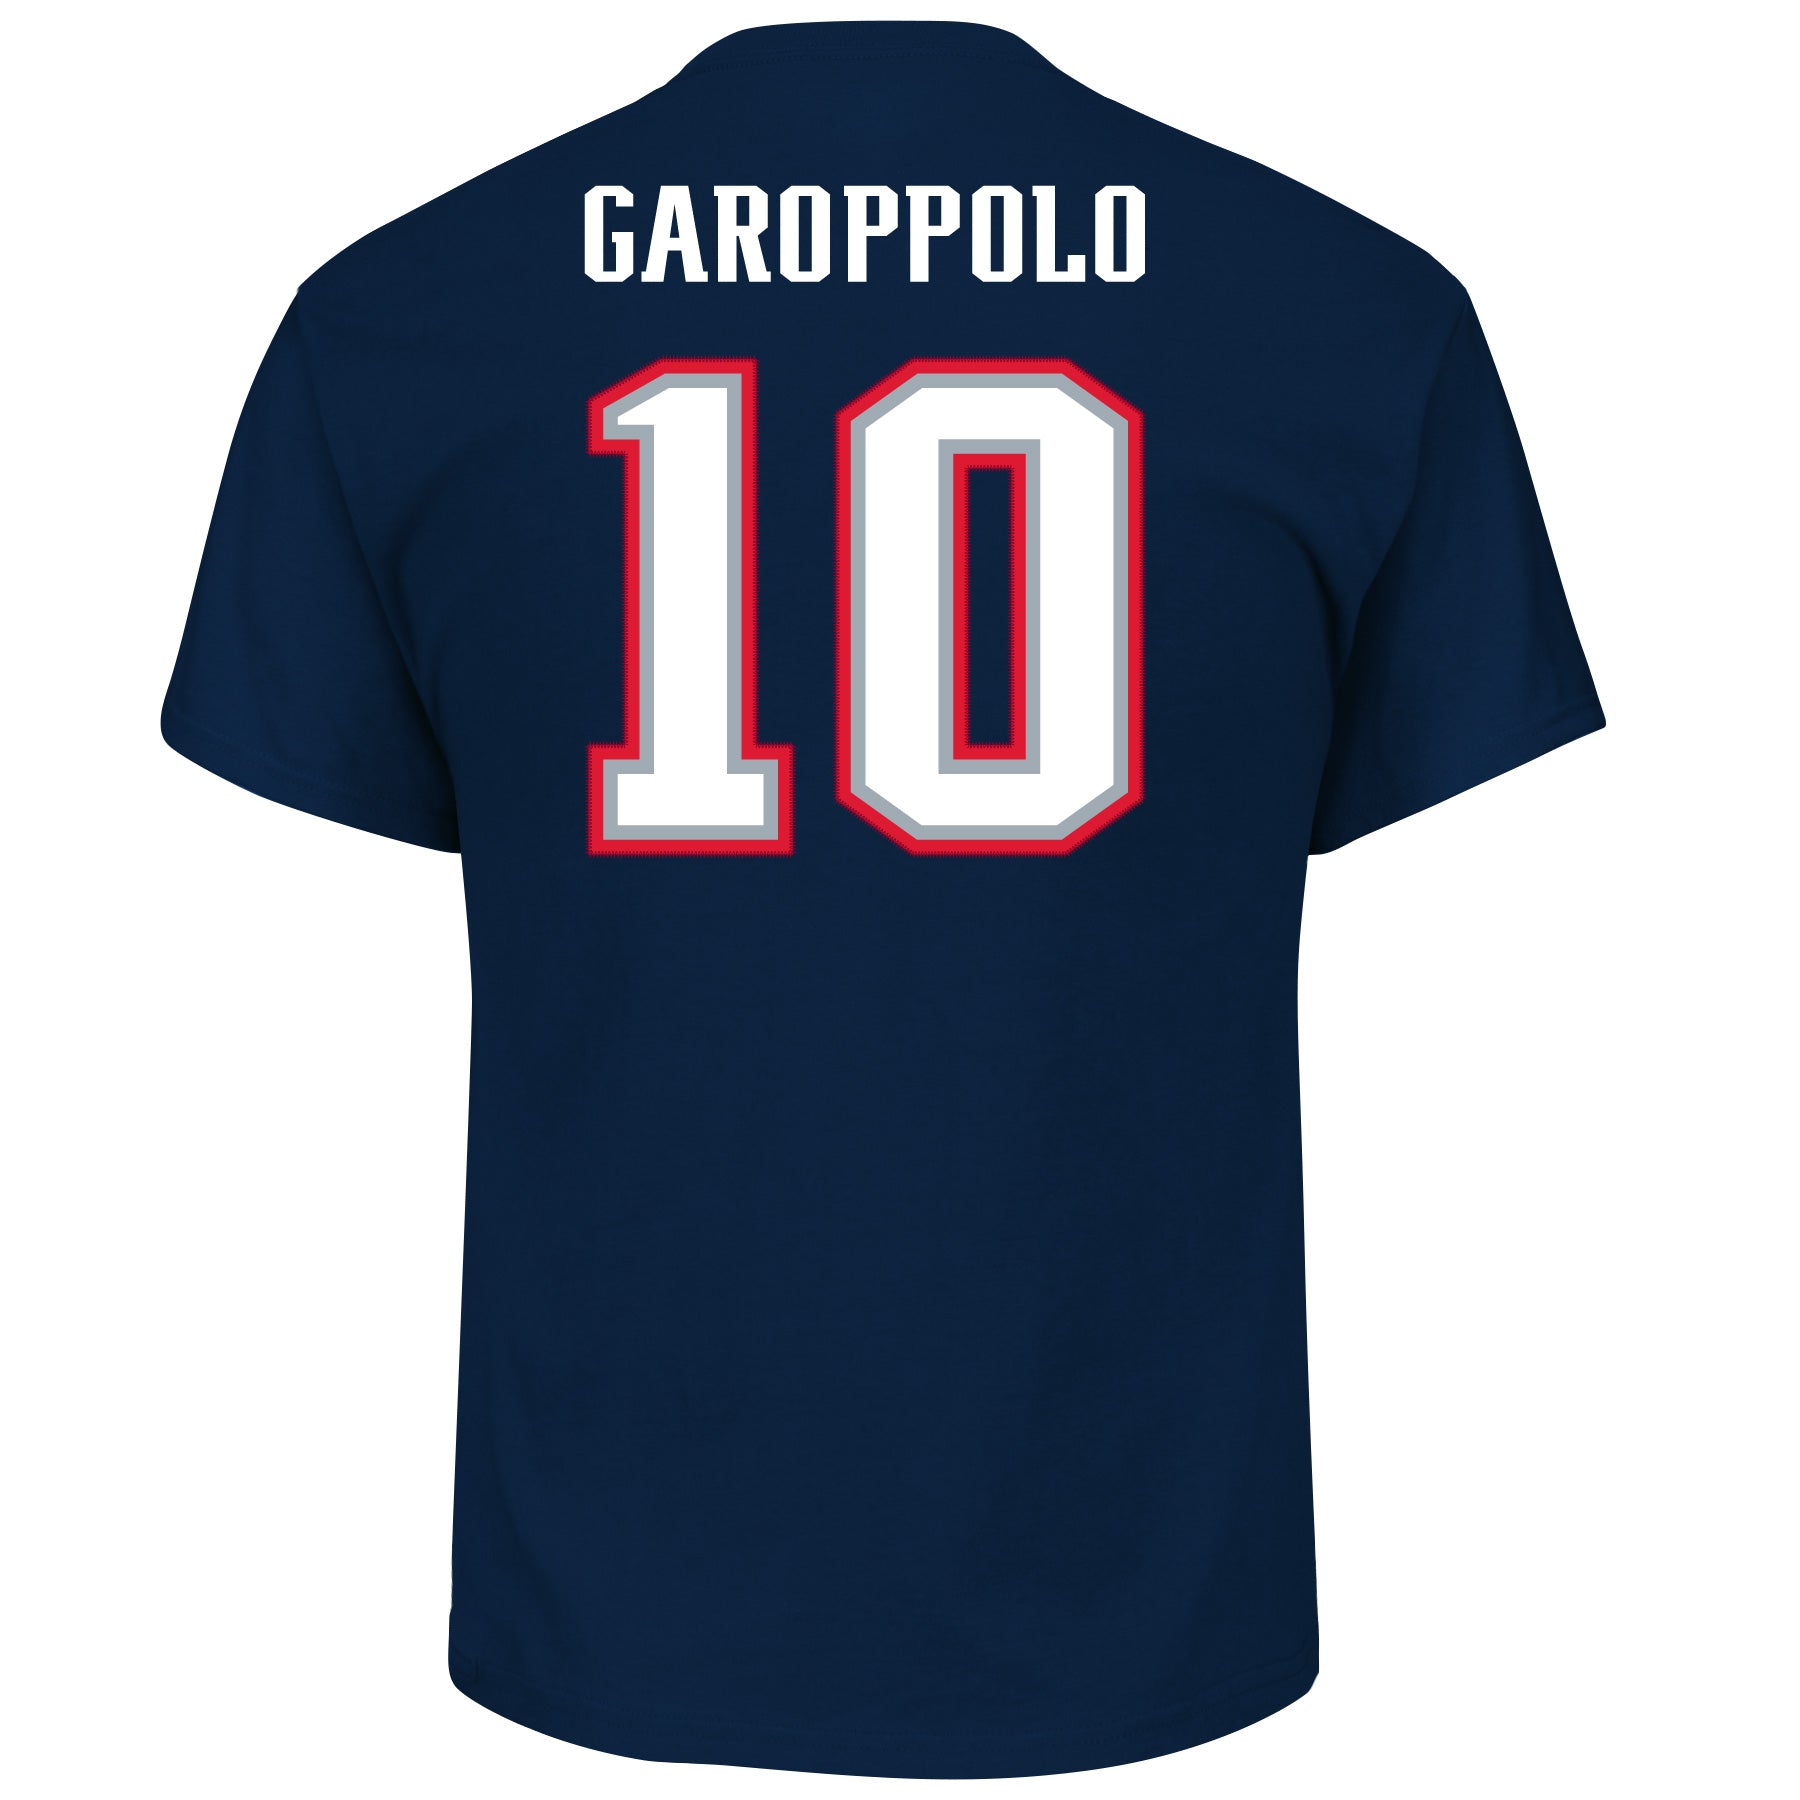 garoppolo patriots shirt